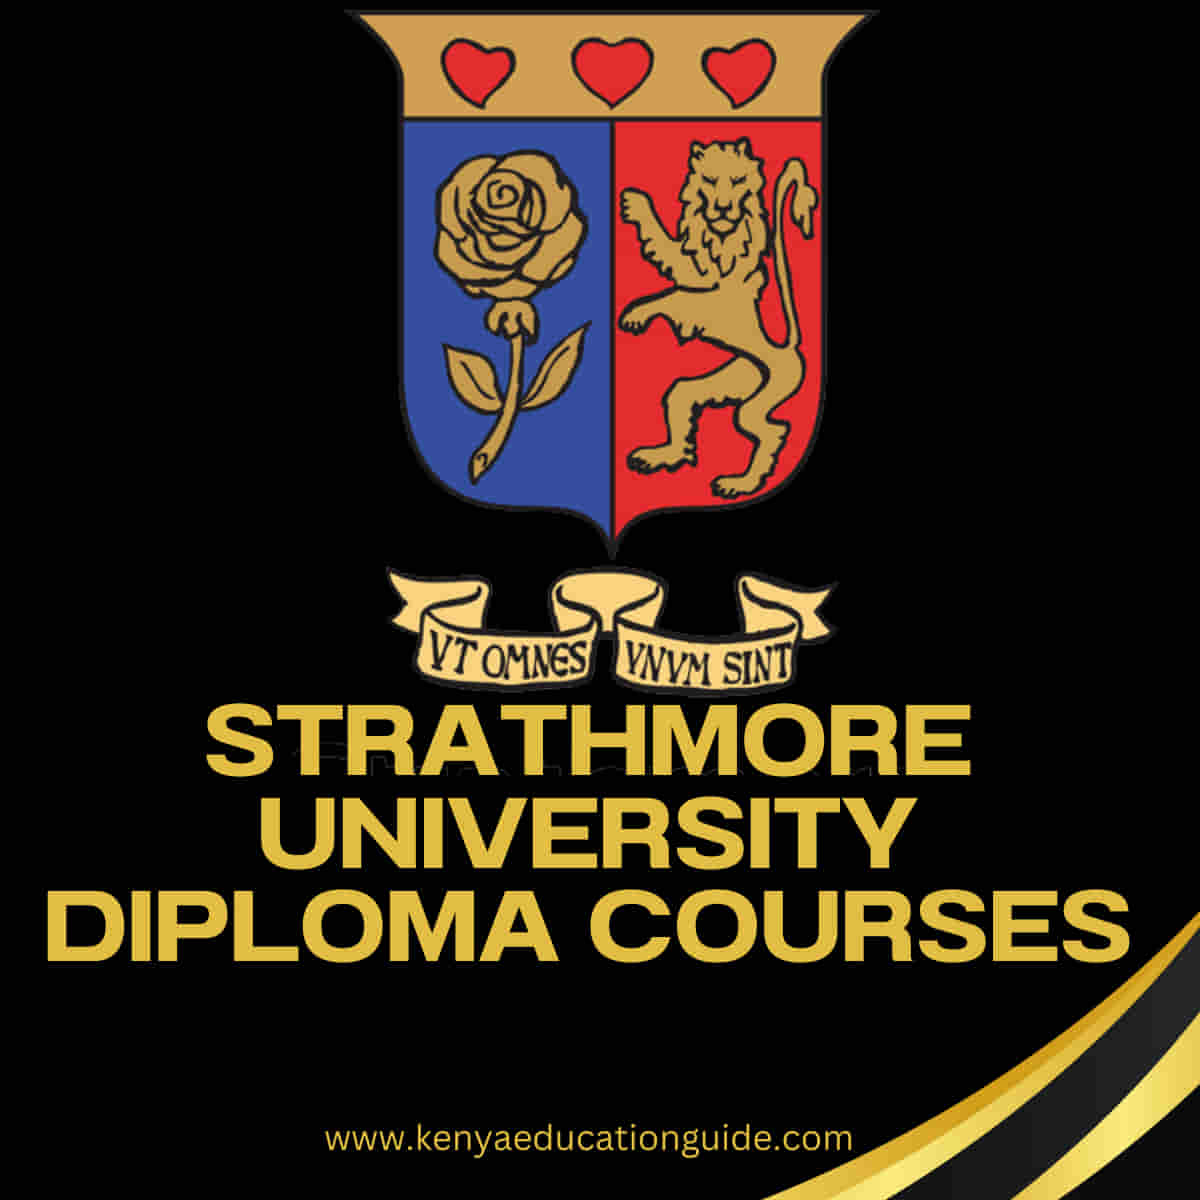 Strathmore university diploma courses